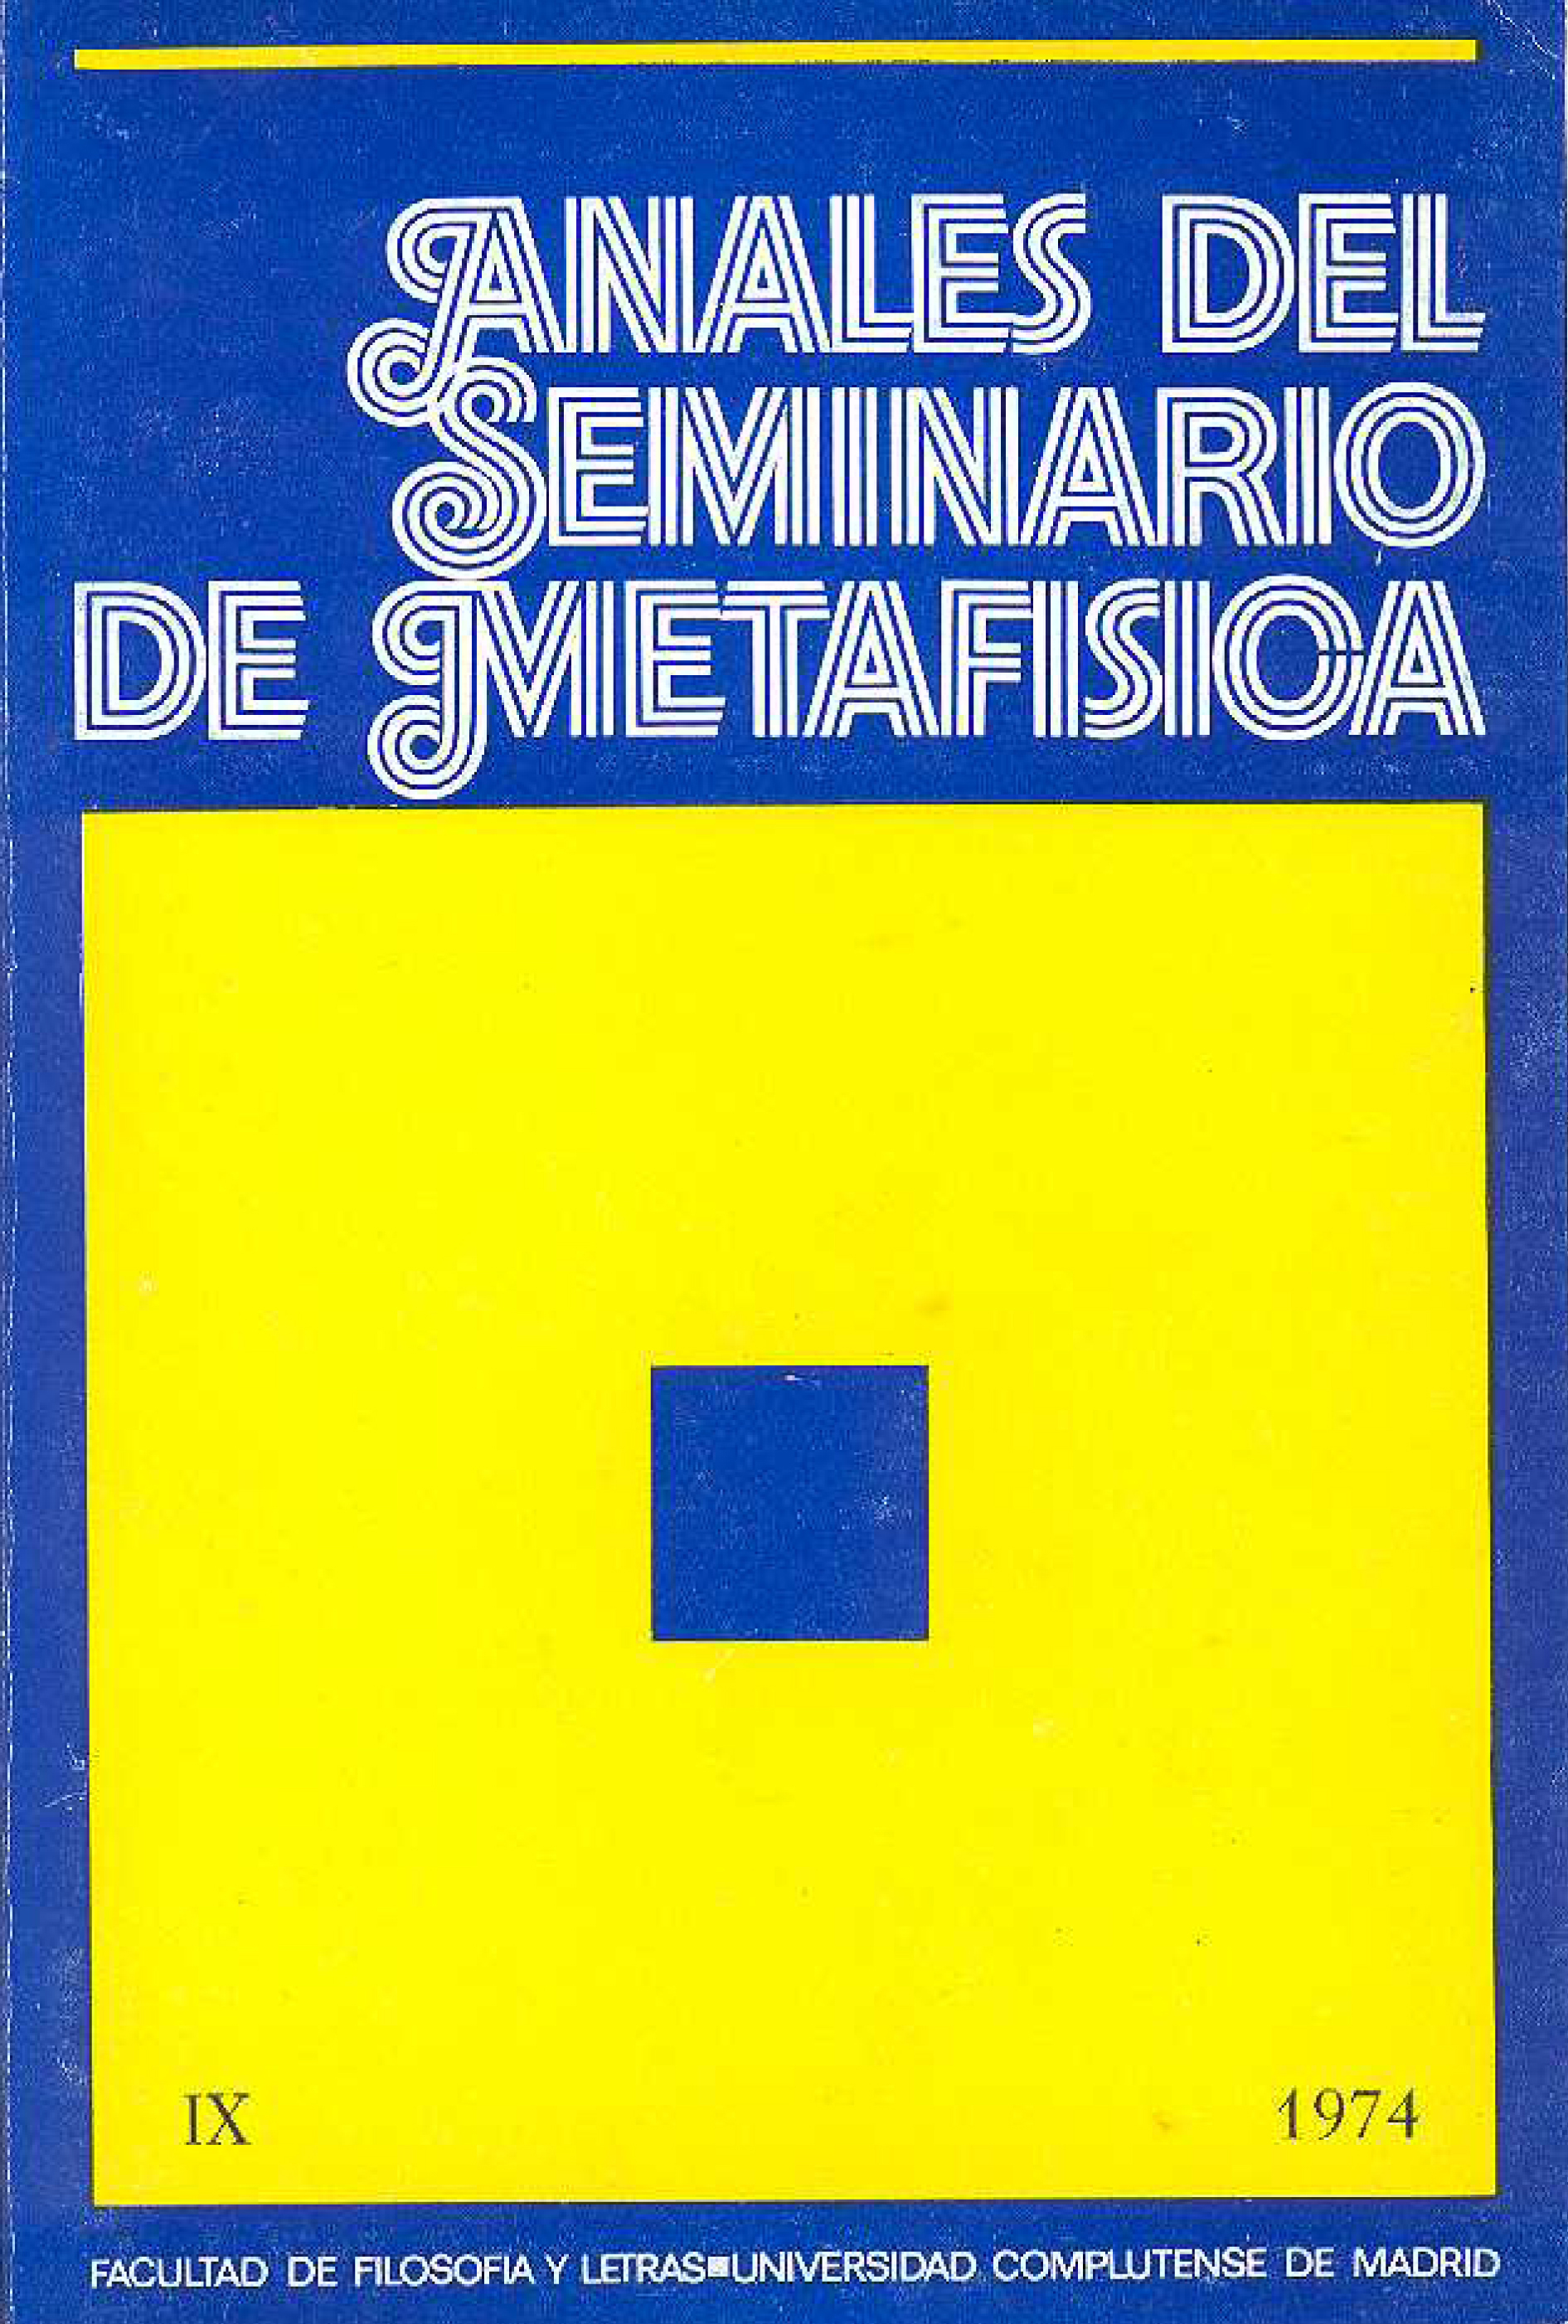 					Ver Vol. 9 (1974)
				